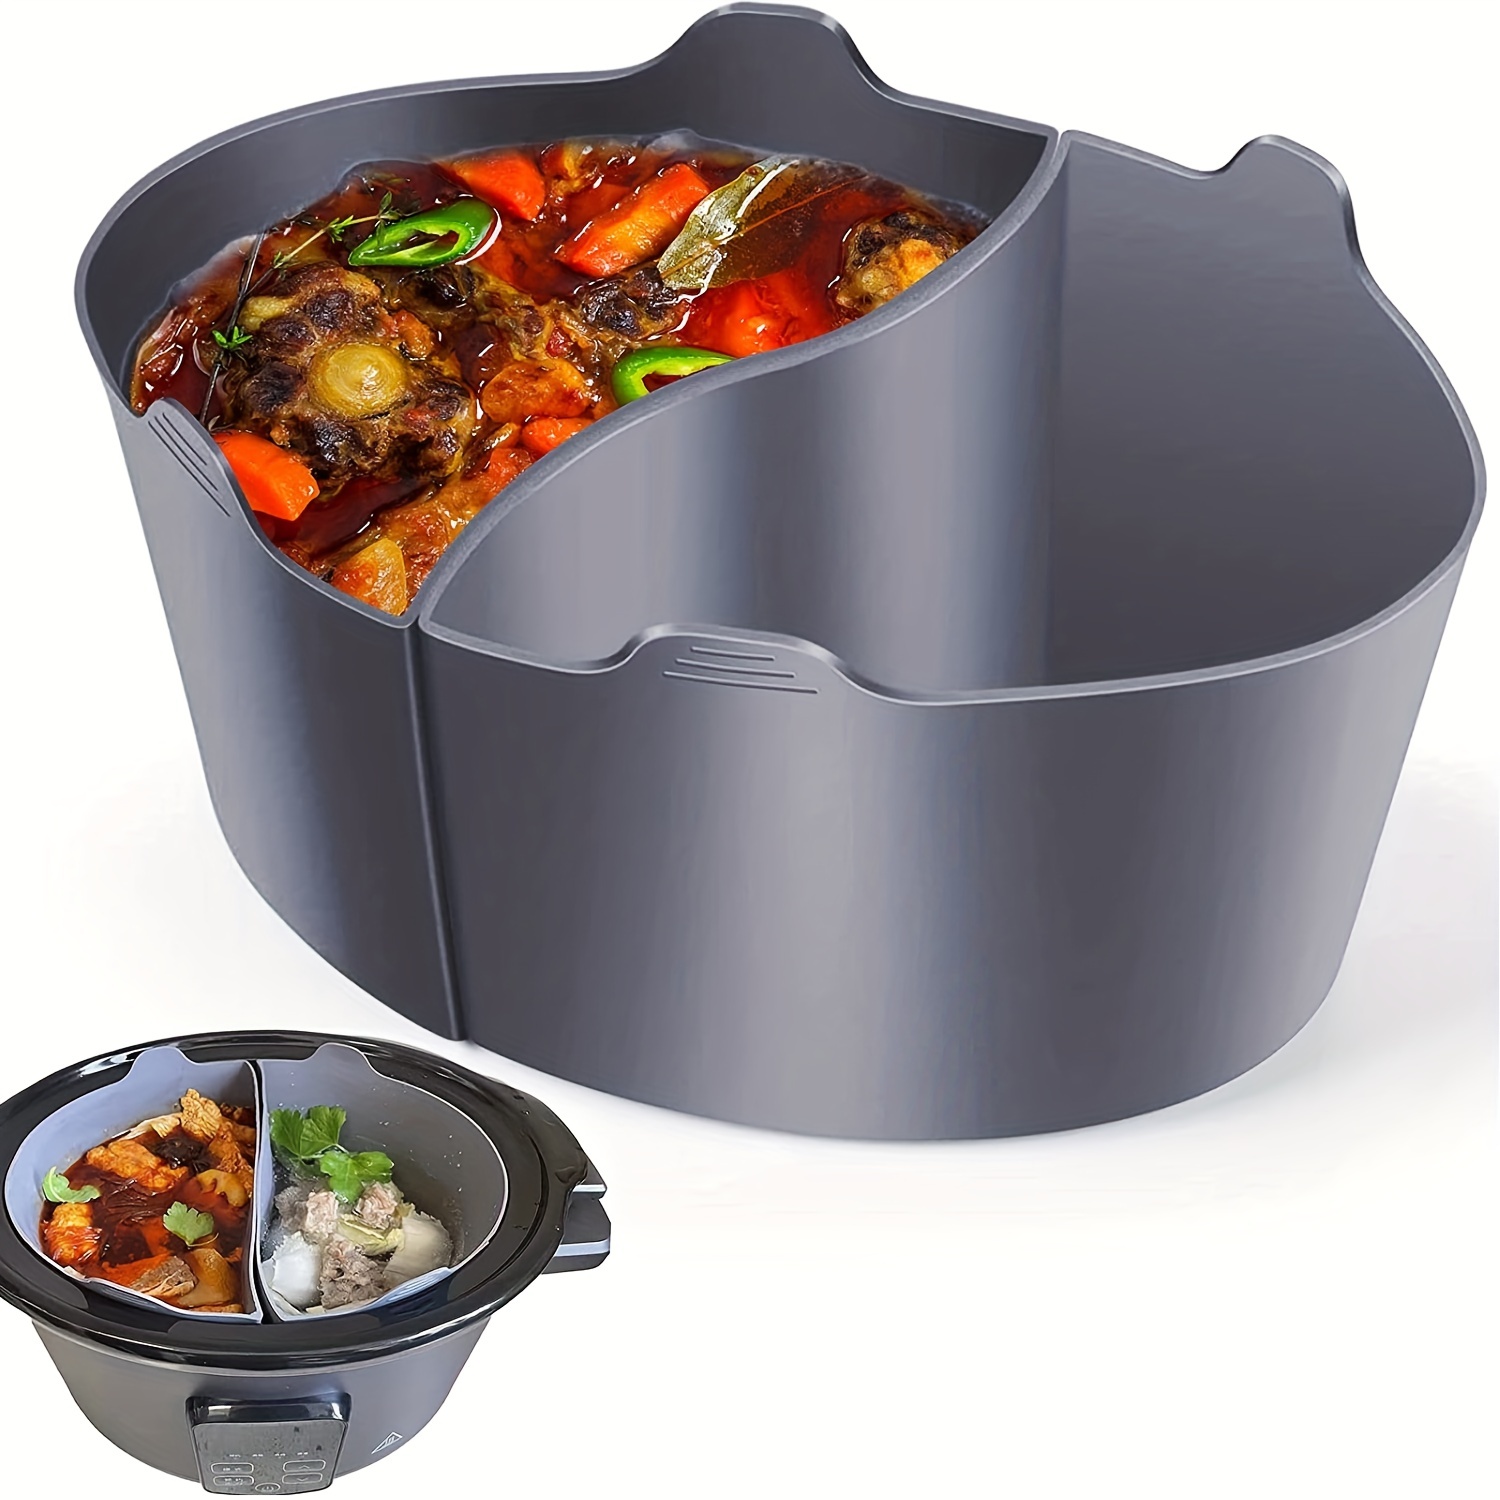 Slow Cooker Liners fit Crock Pot 7-8 QT,Maywe Tanso for Crock Pot